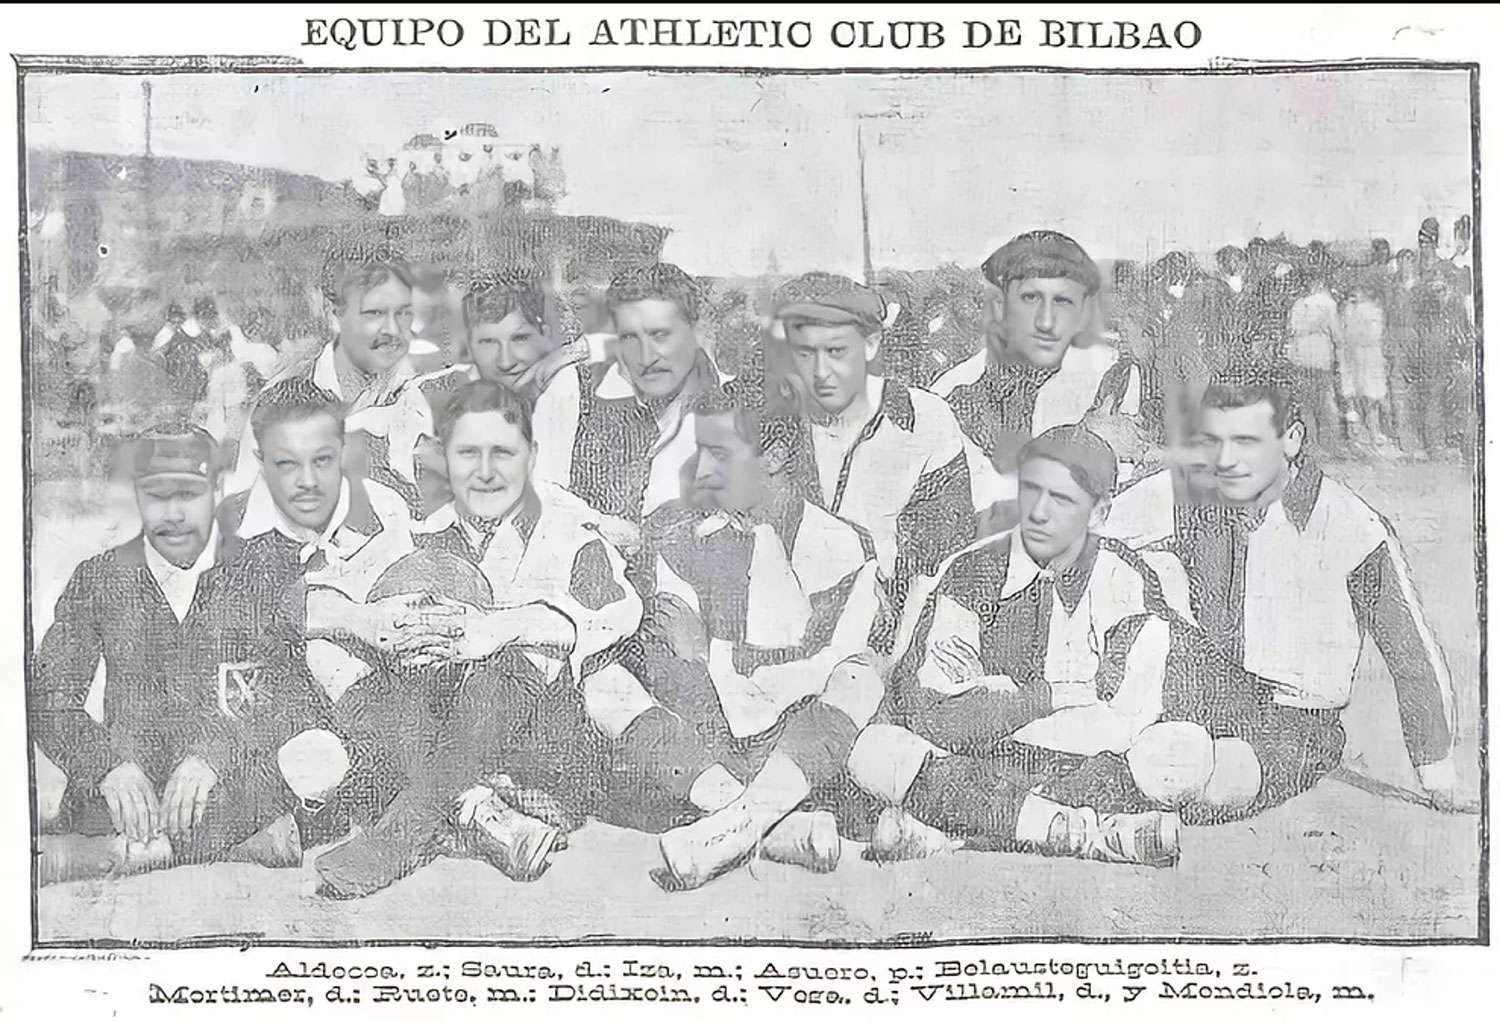 Disdisheim en el Athletic Club de Bilbao